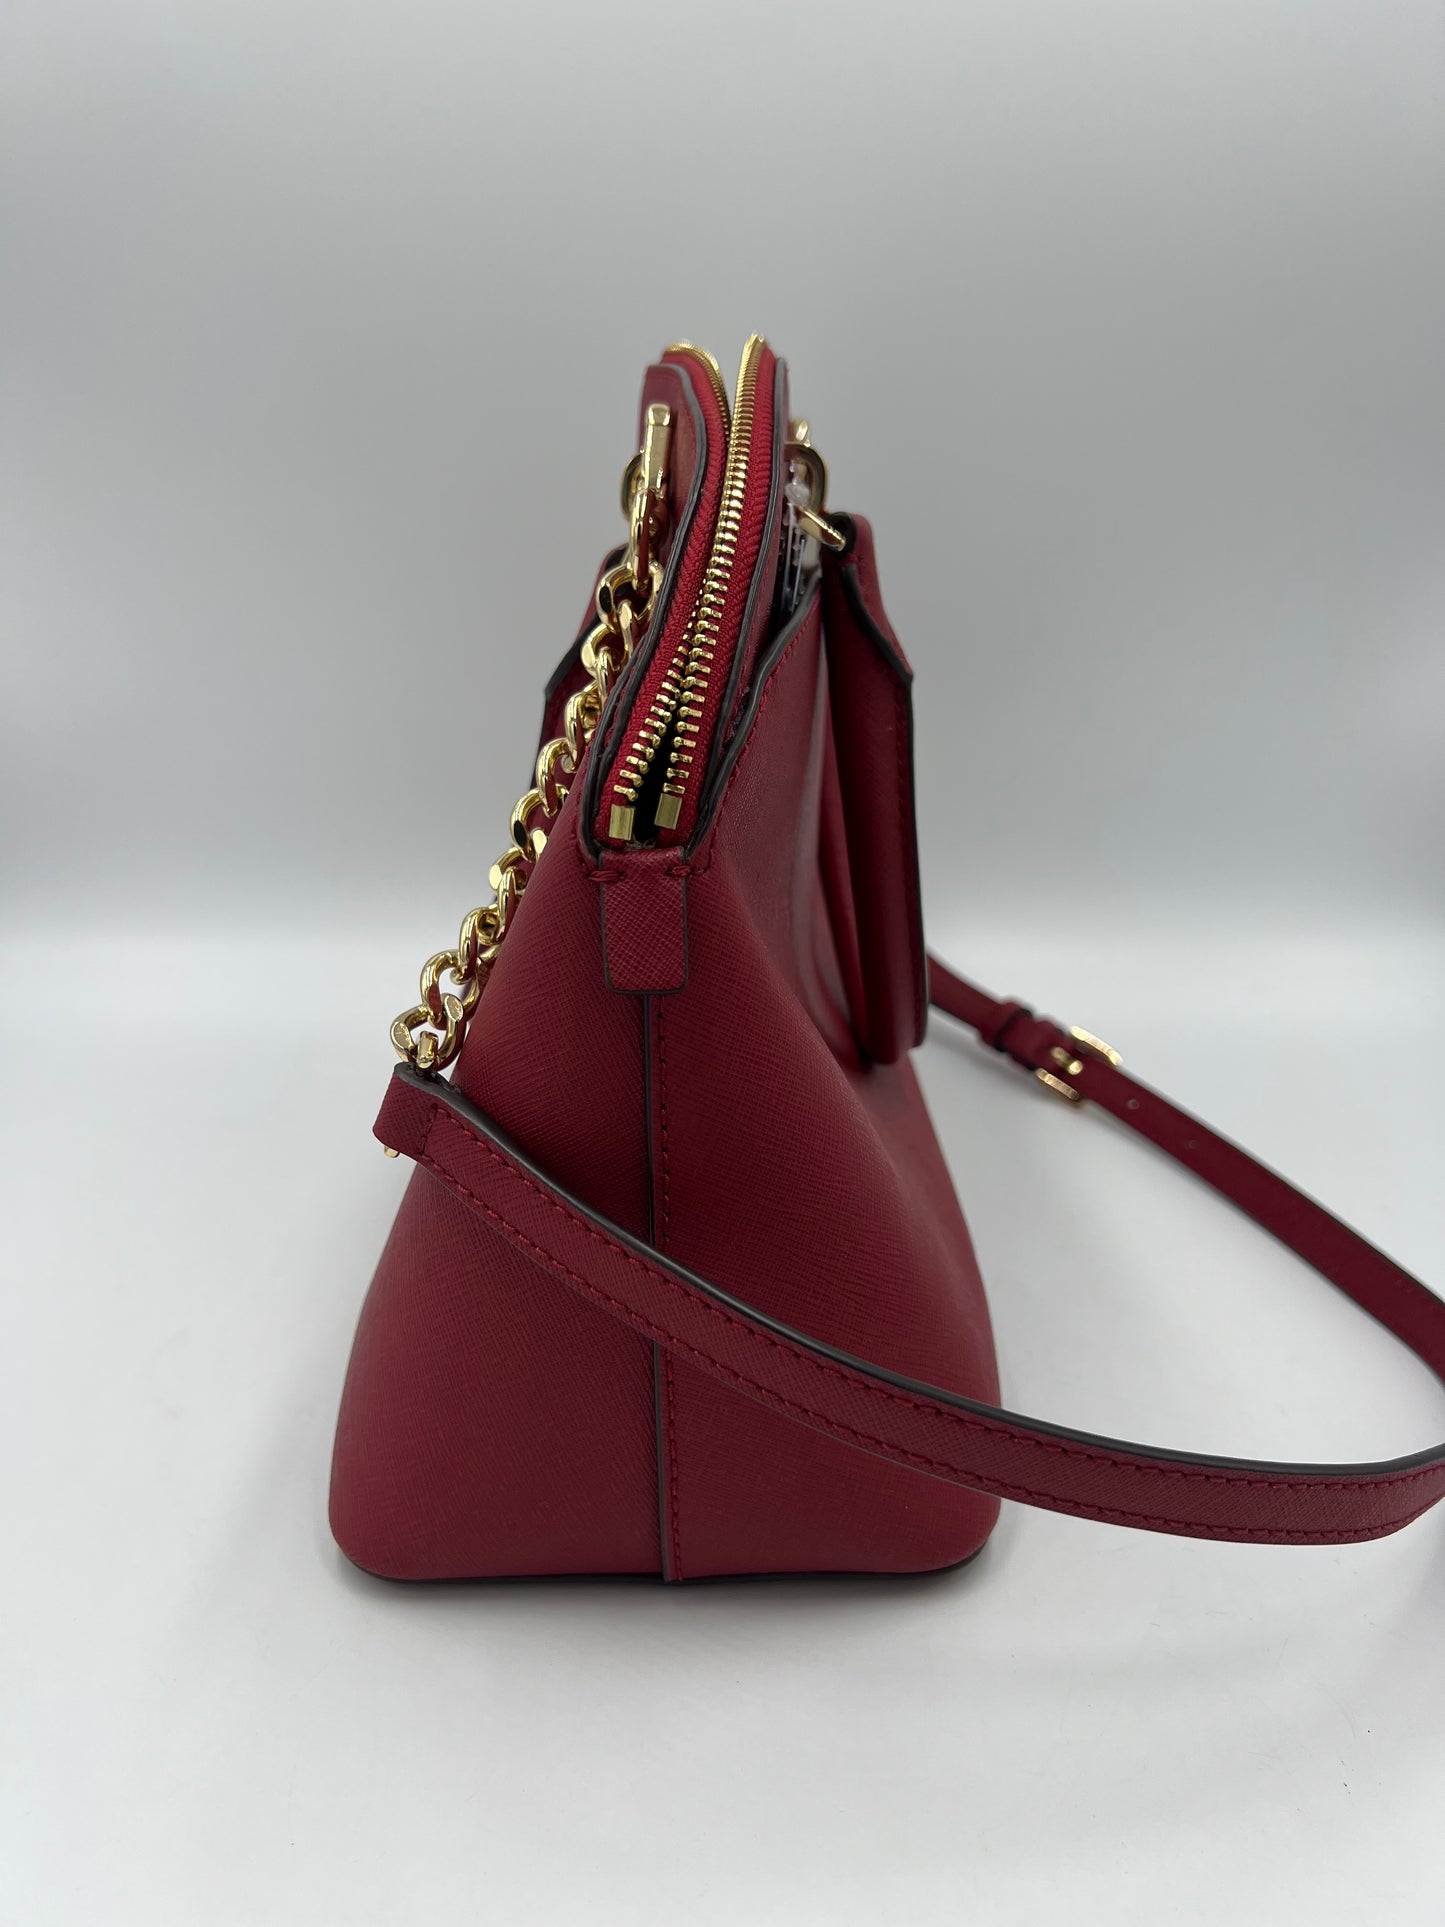 Handbag Designer By Michael Kors